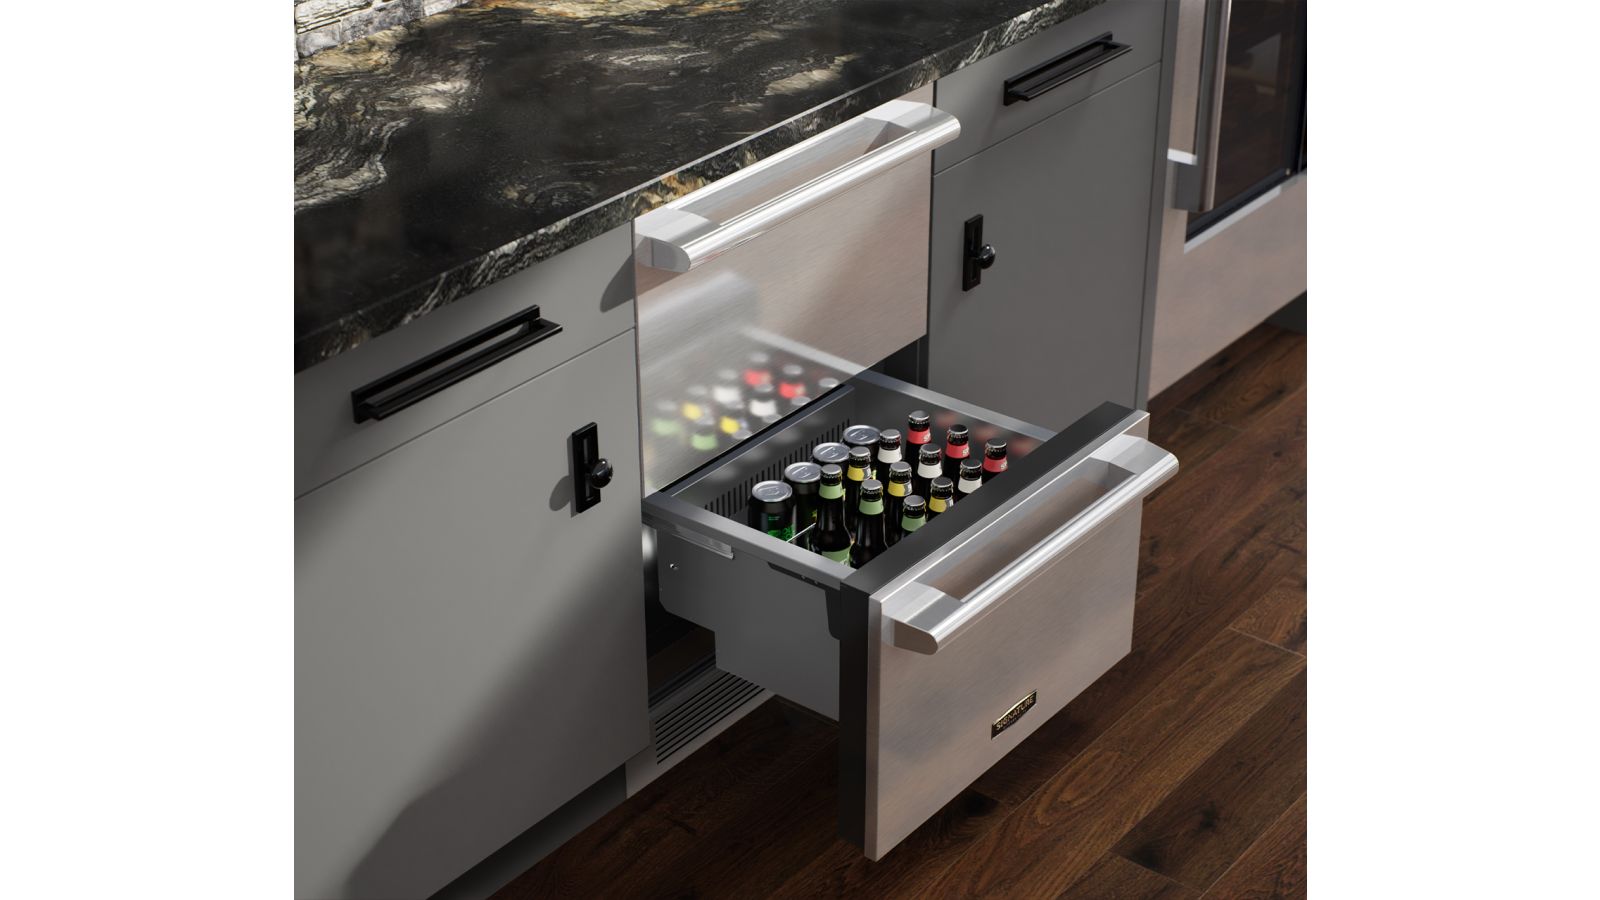 The Undercounter Convertible Refrigerator/Freezer Drawers